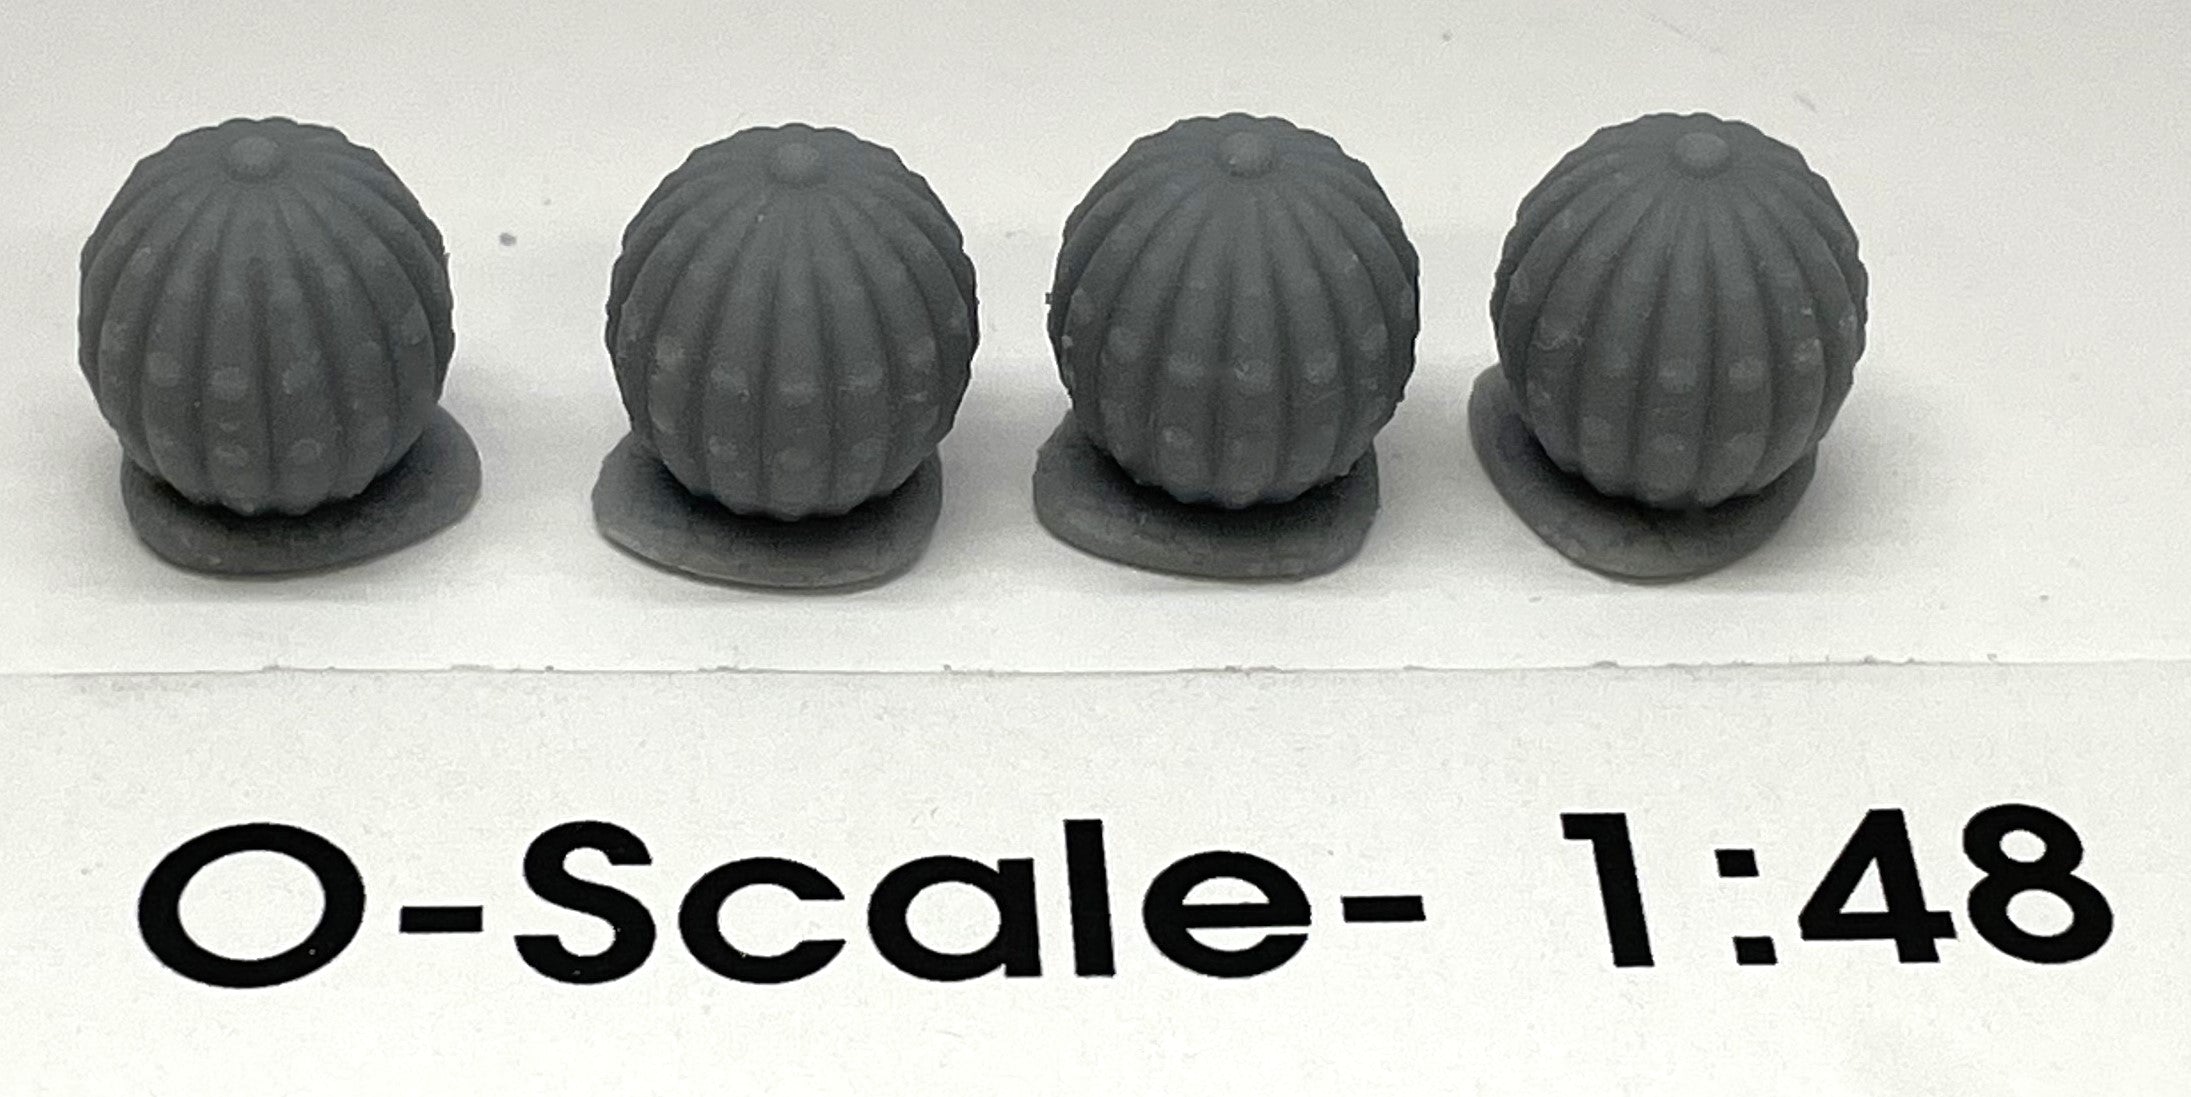 PPM-33566 - Cacti: Barrel- Small, 2½’ Tall (4)